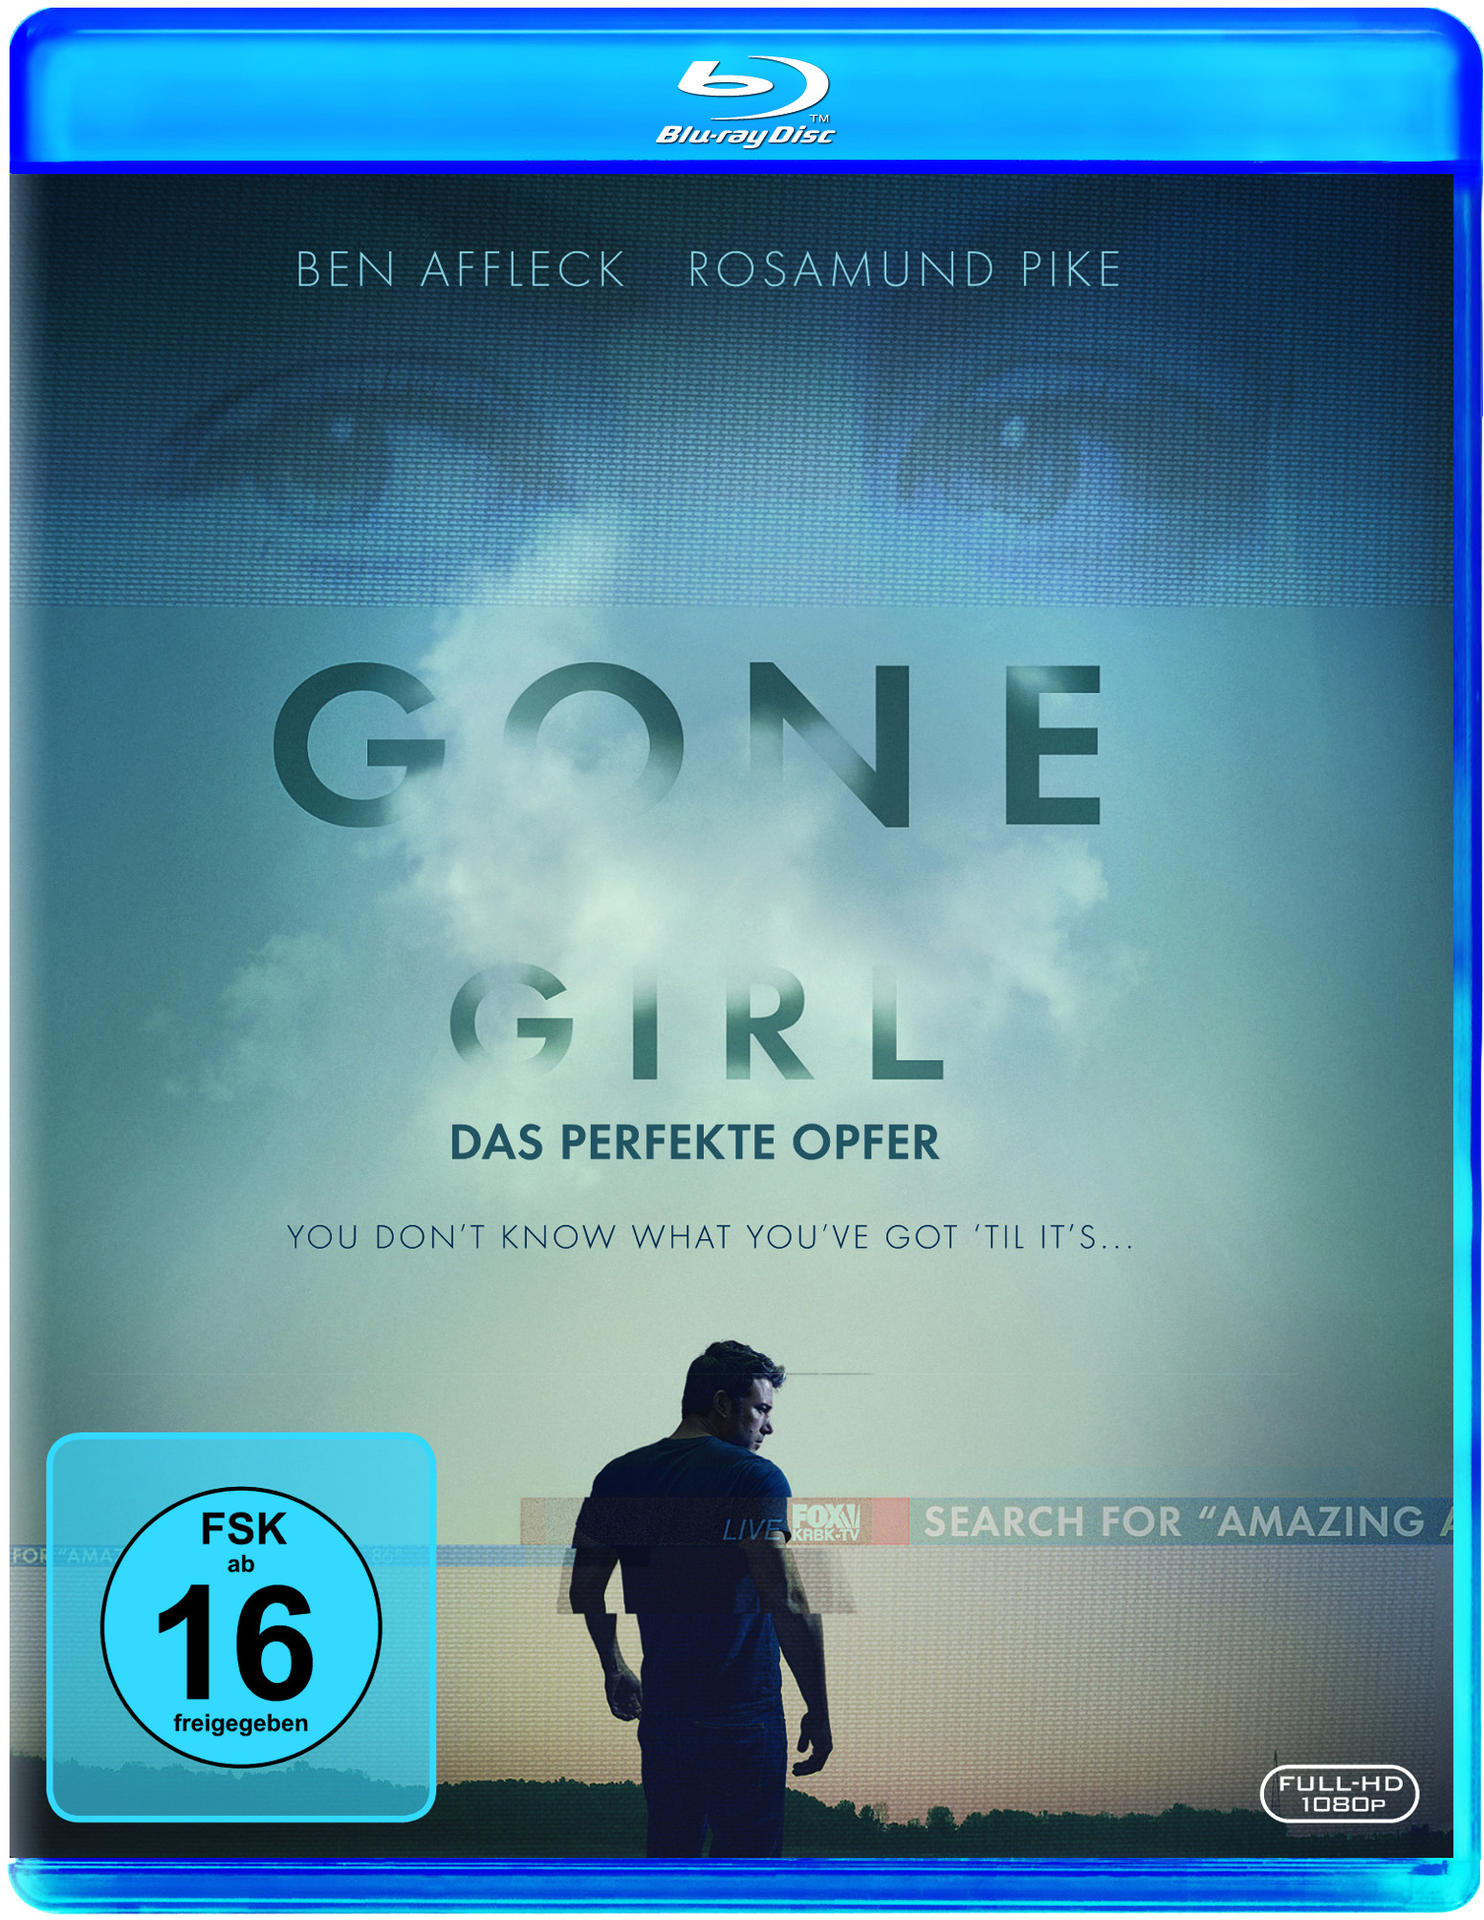 Blu-ray Opfer Girl perfekte - Das Gone